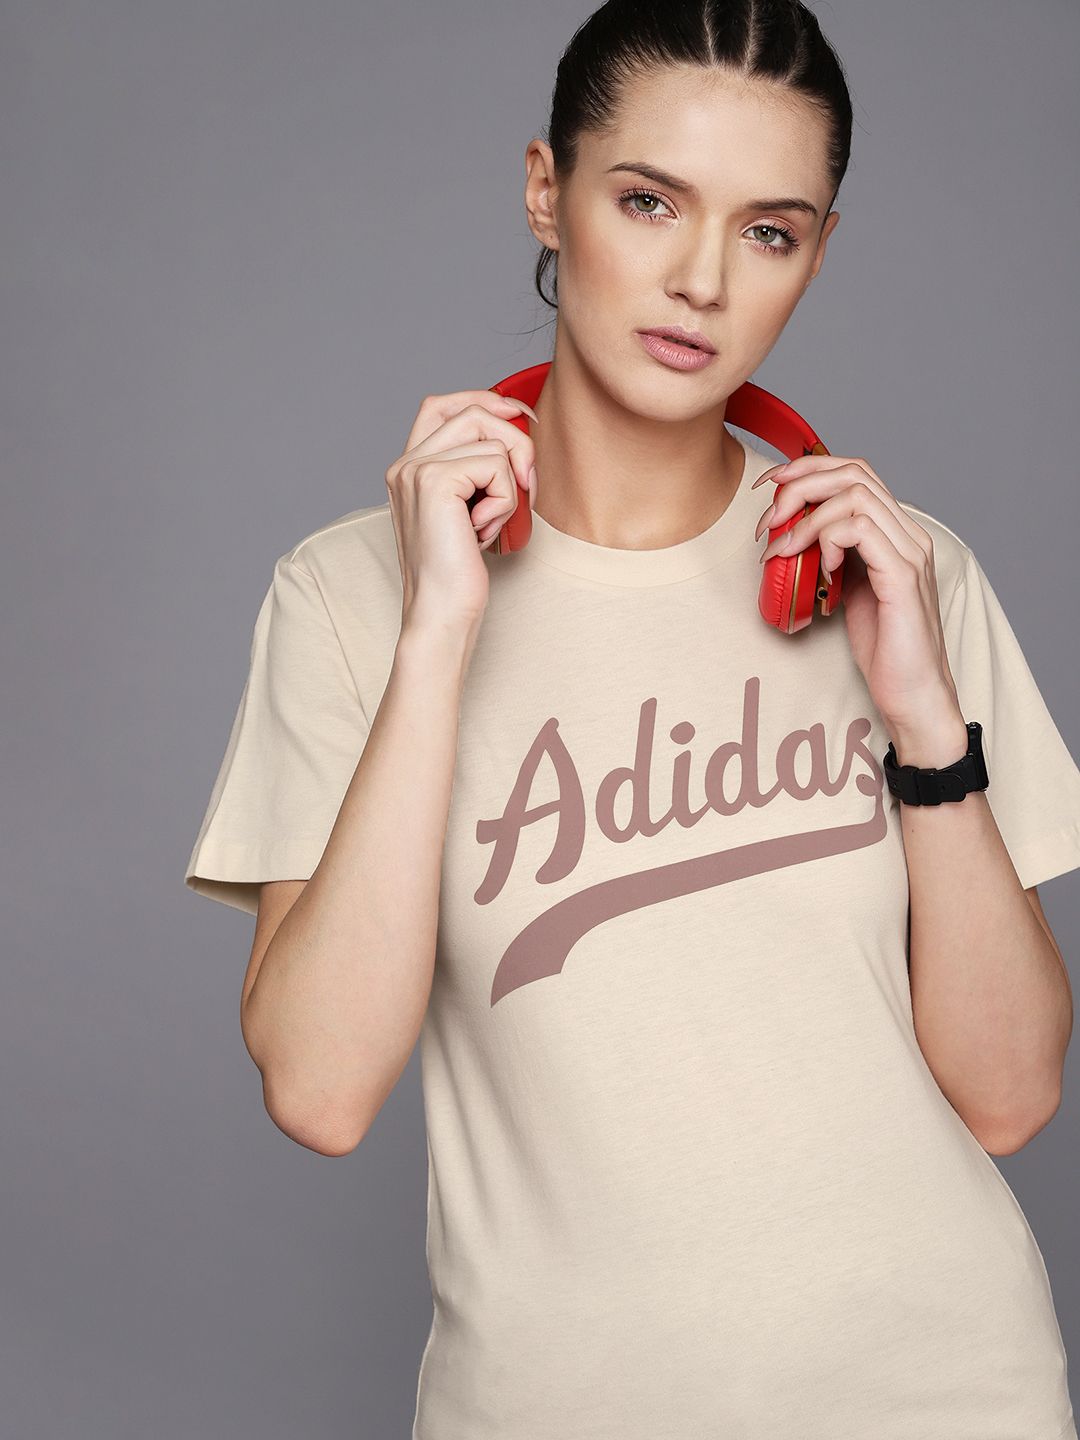 ADIDAS Originals Women Off White & Mauve Printed Pure Cotton Modern B-Ball T-shirt Price in India